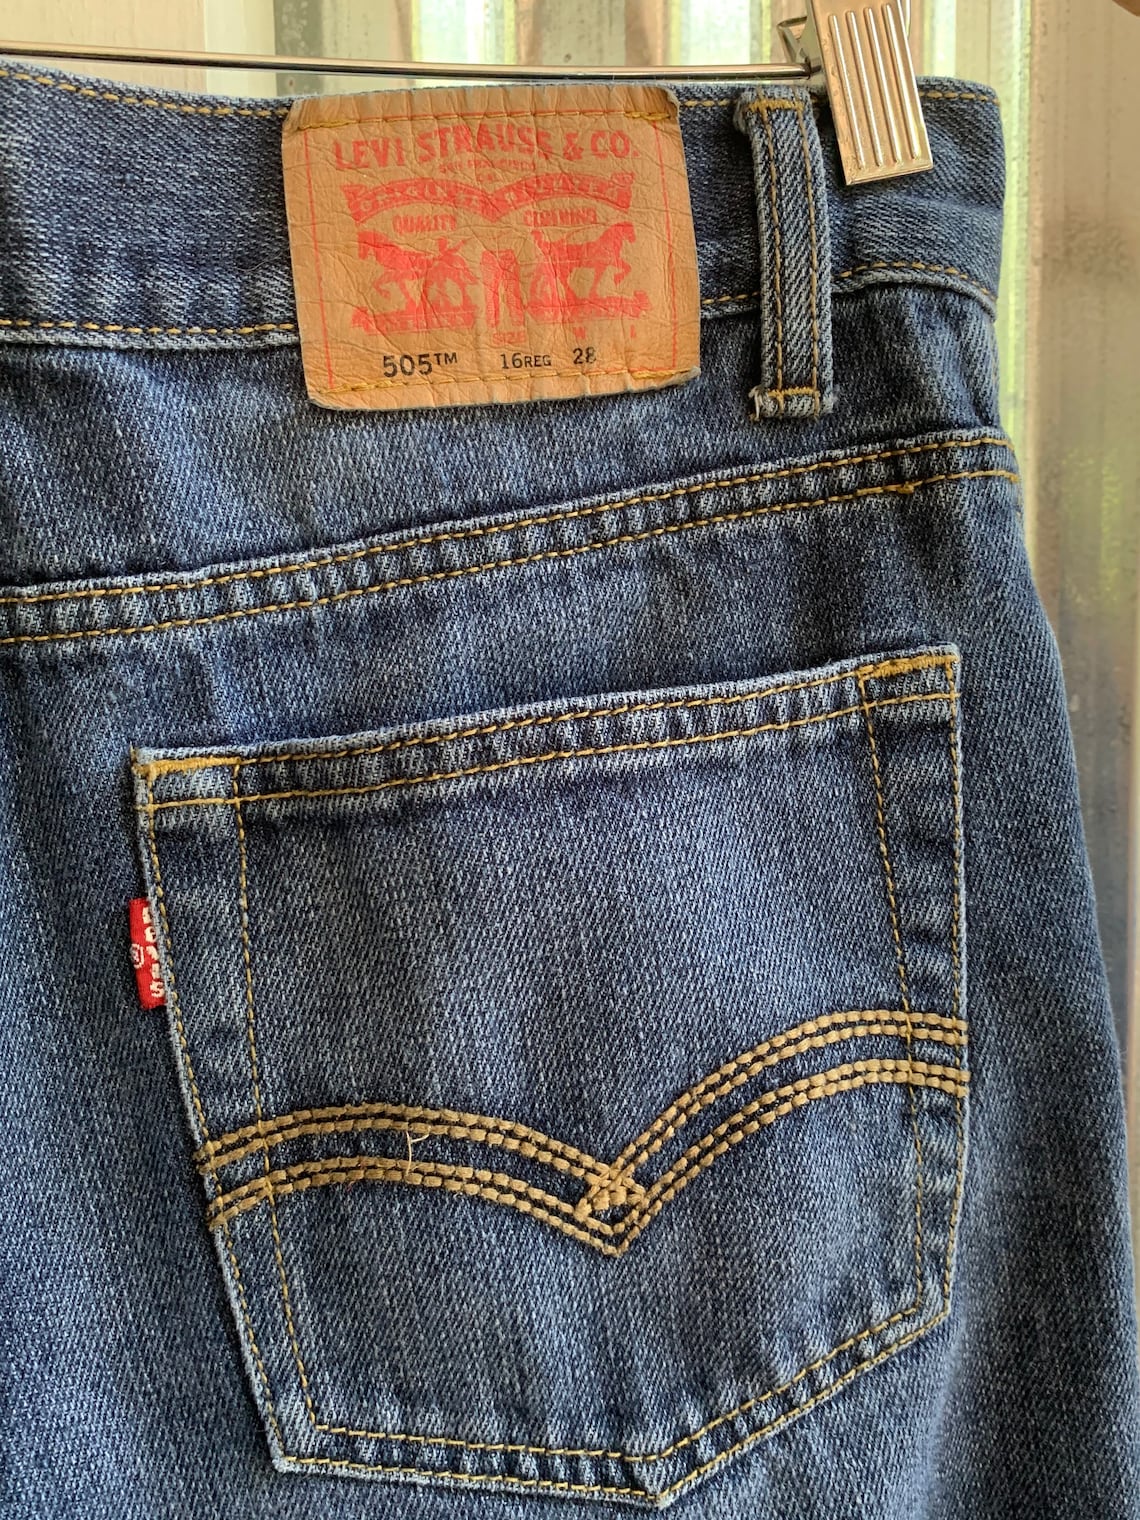 Levi's 505 denim jean shorts // 28 W x 28 L // Low rise | Etsy